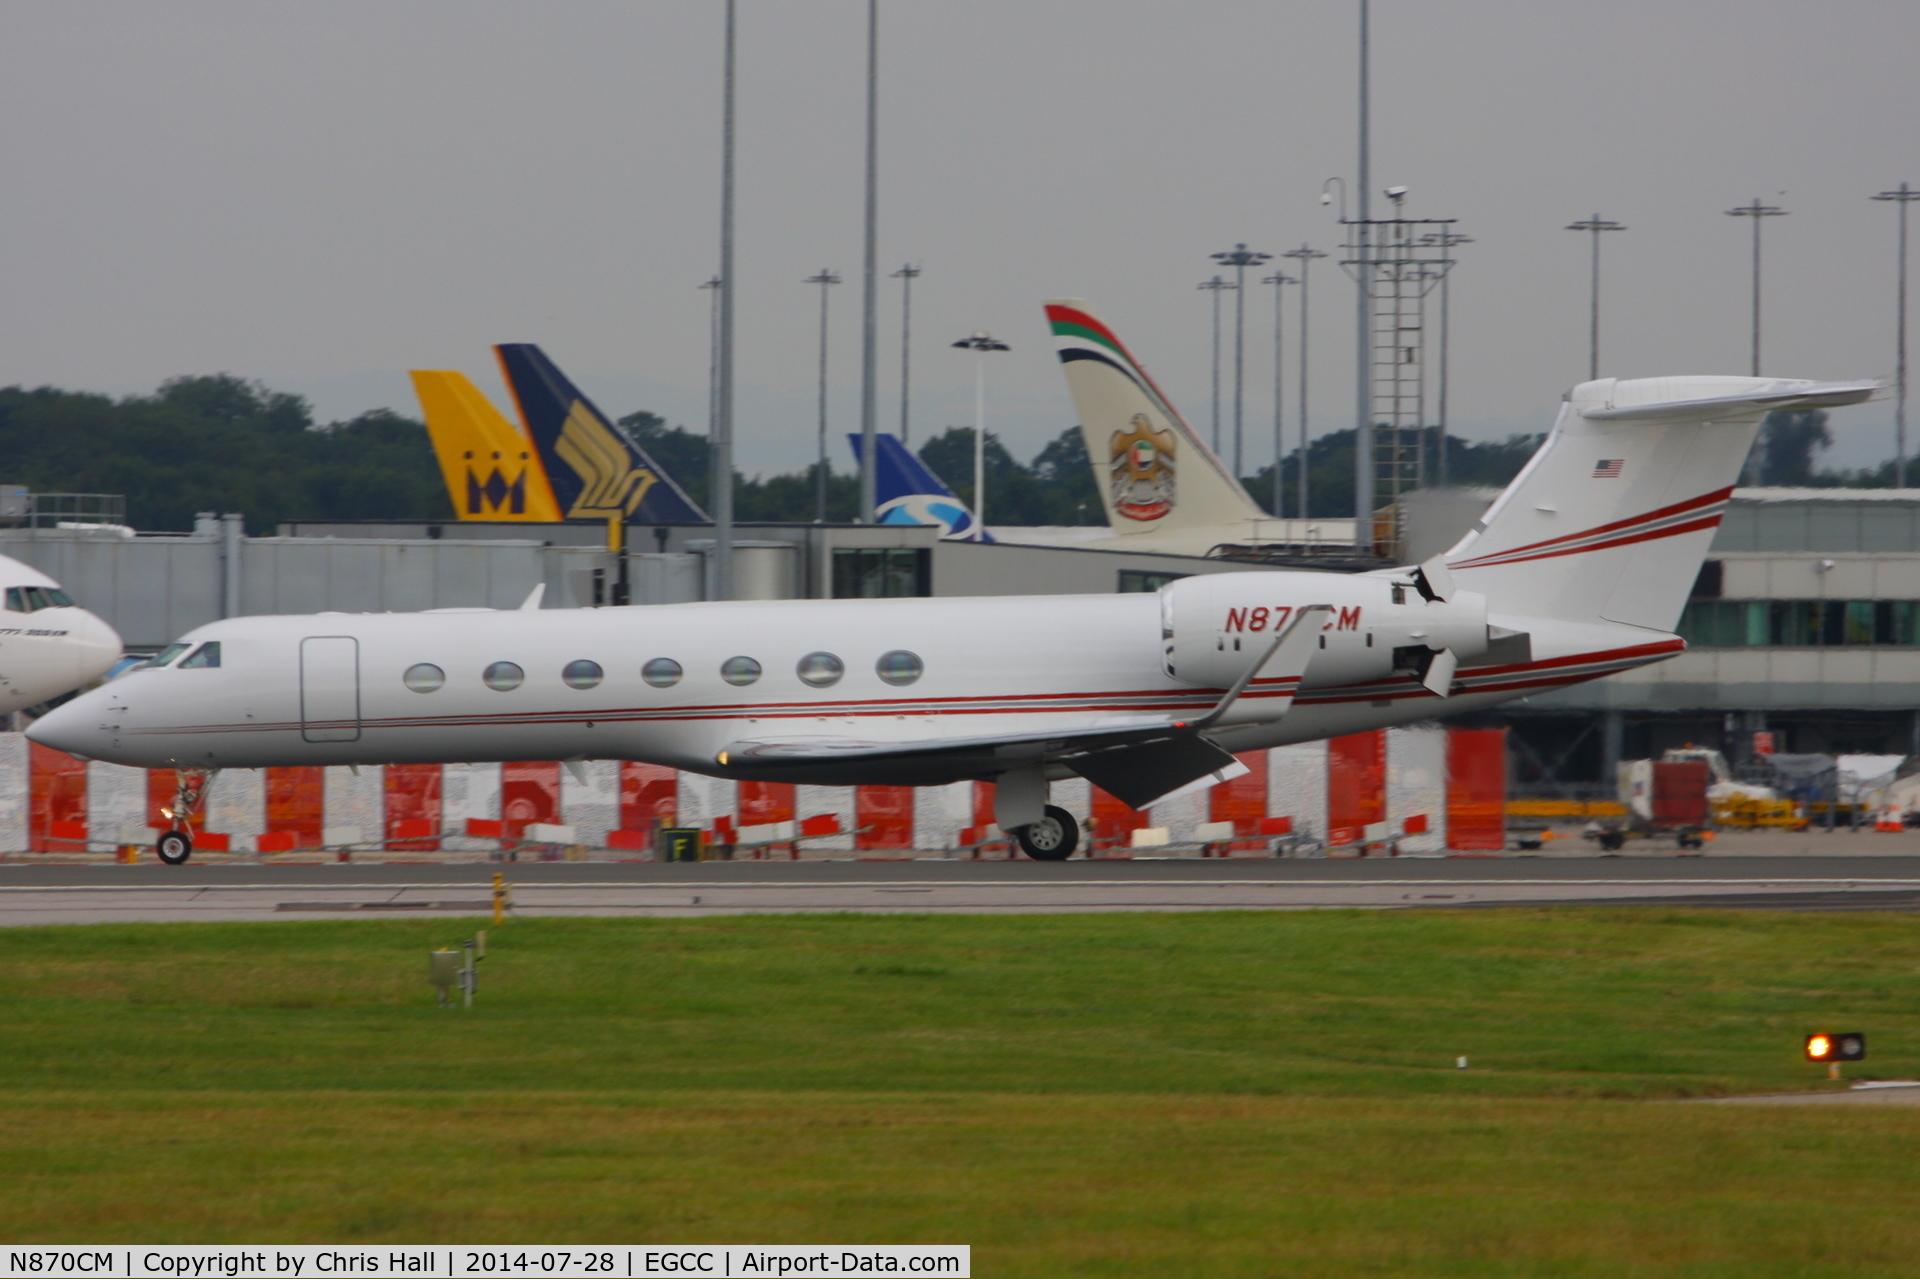 N870CM, 2005 Gulfstream Aerospace GV-SP (G550) C/N 5076, Caremark Aviation